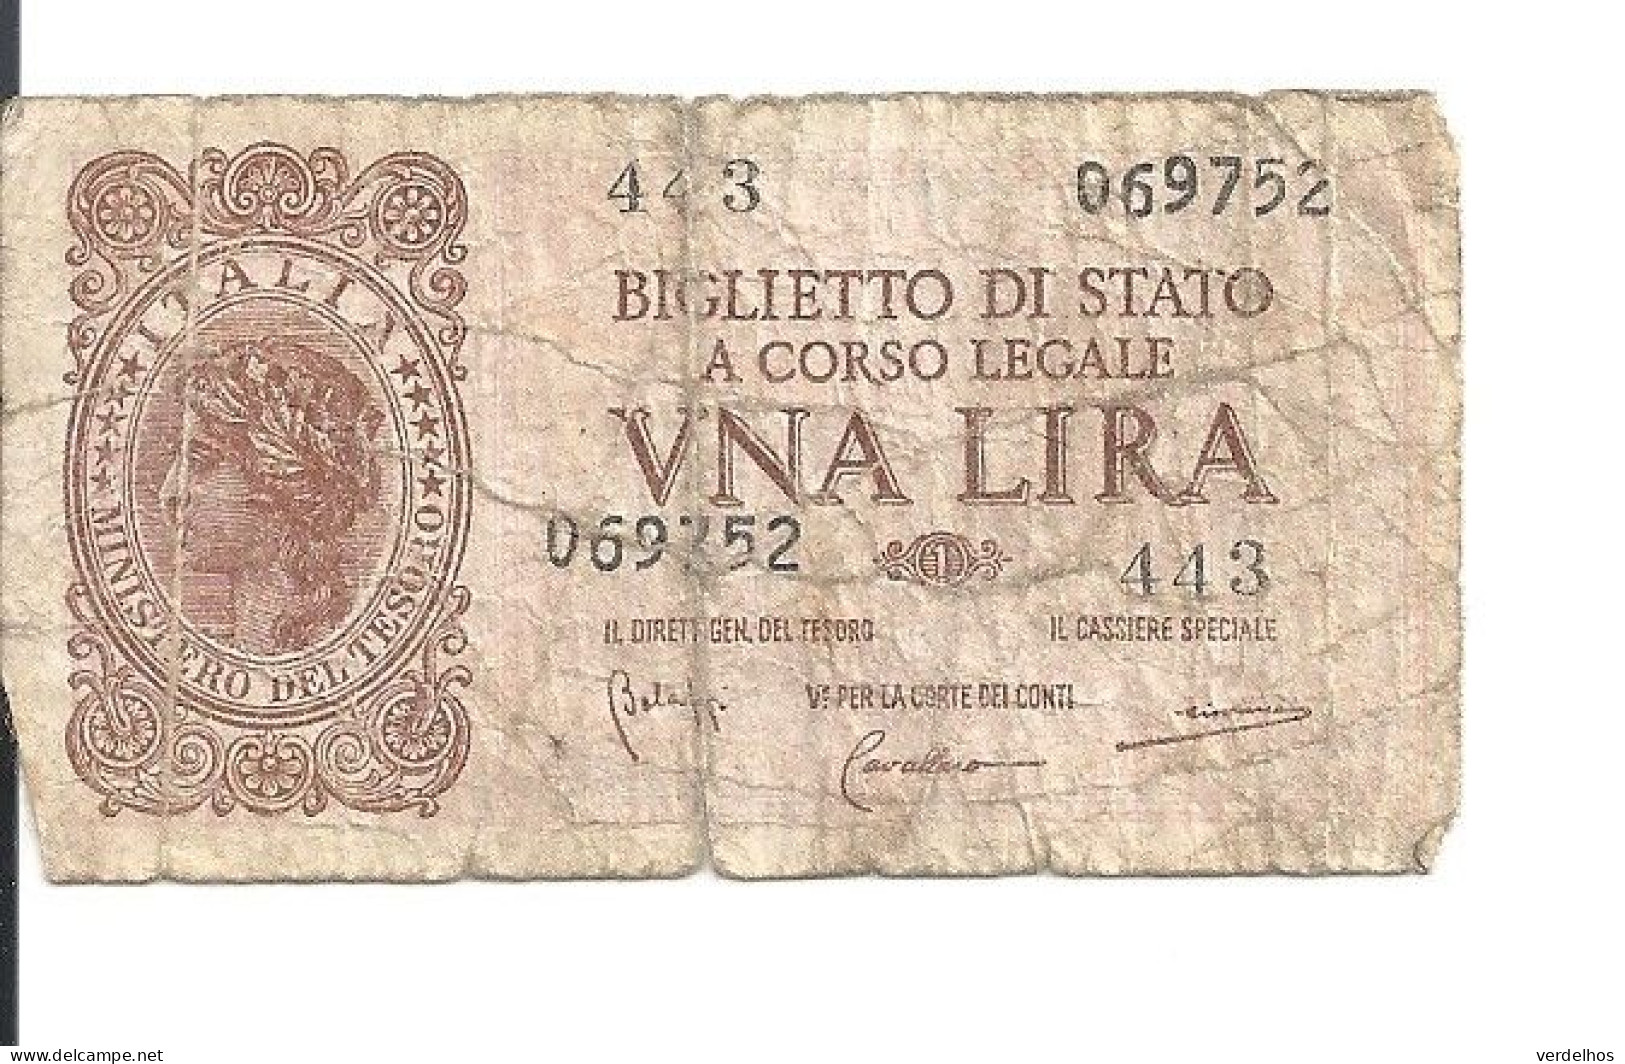 ITALIE 1 LIRE 1944 VG+ P 29 B - Regno D'Italia – 1 Lire